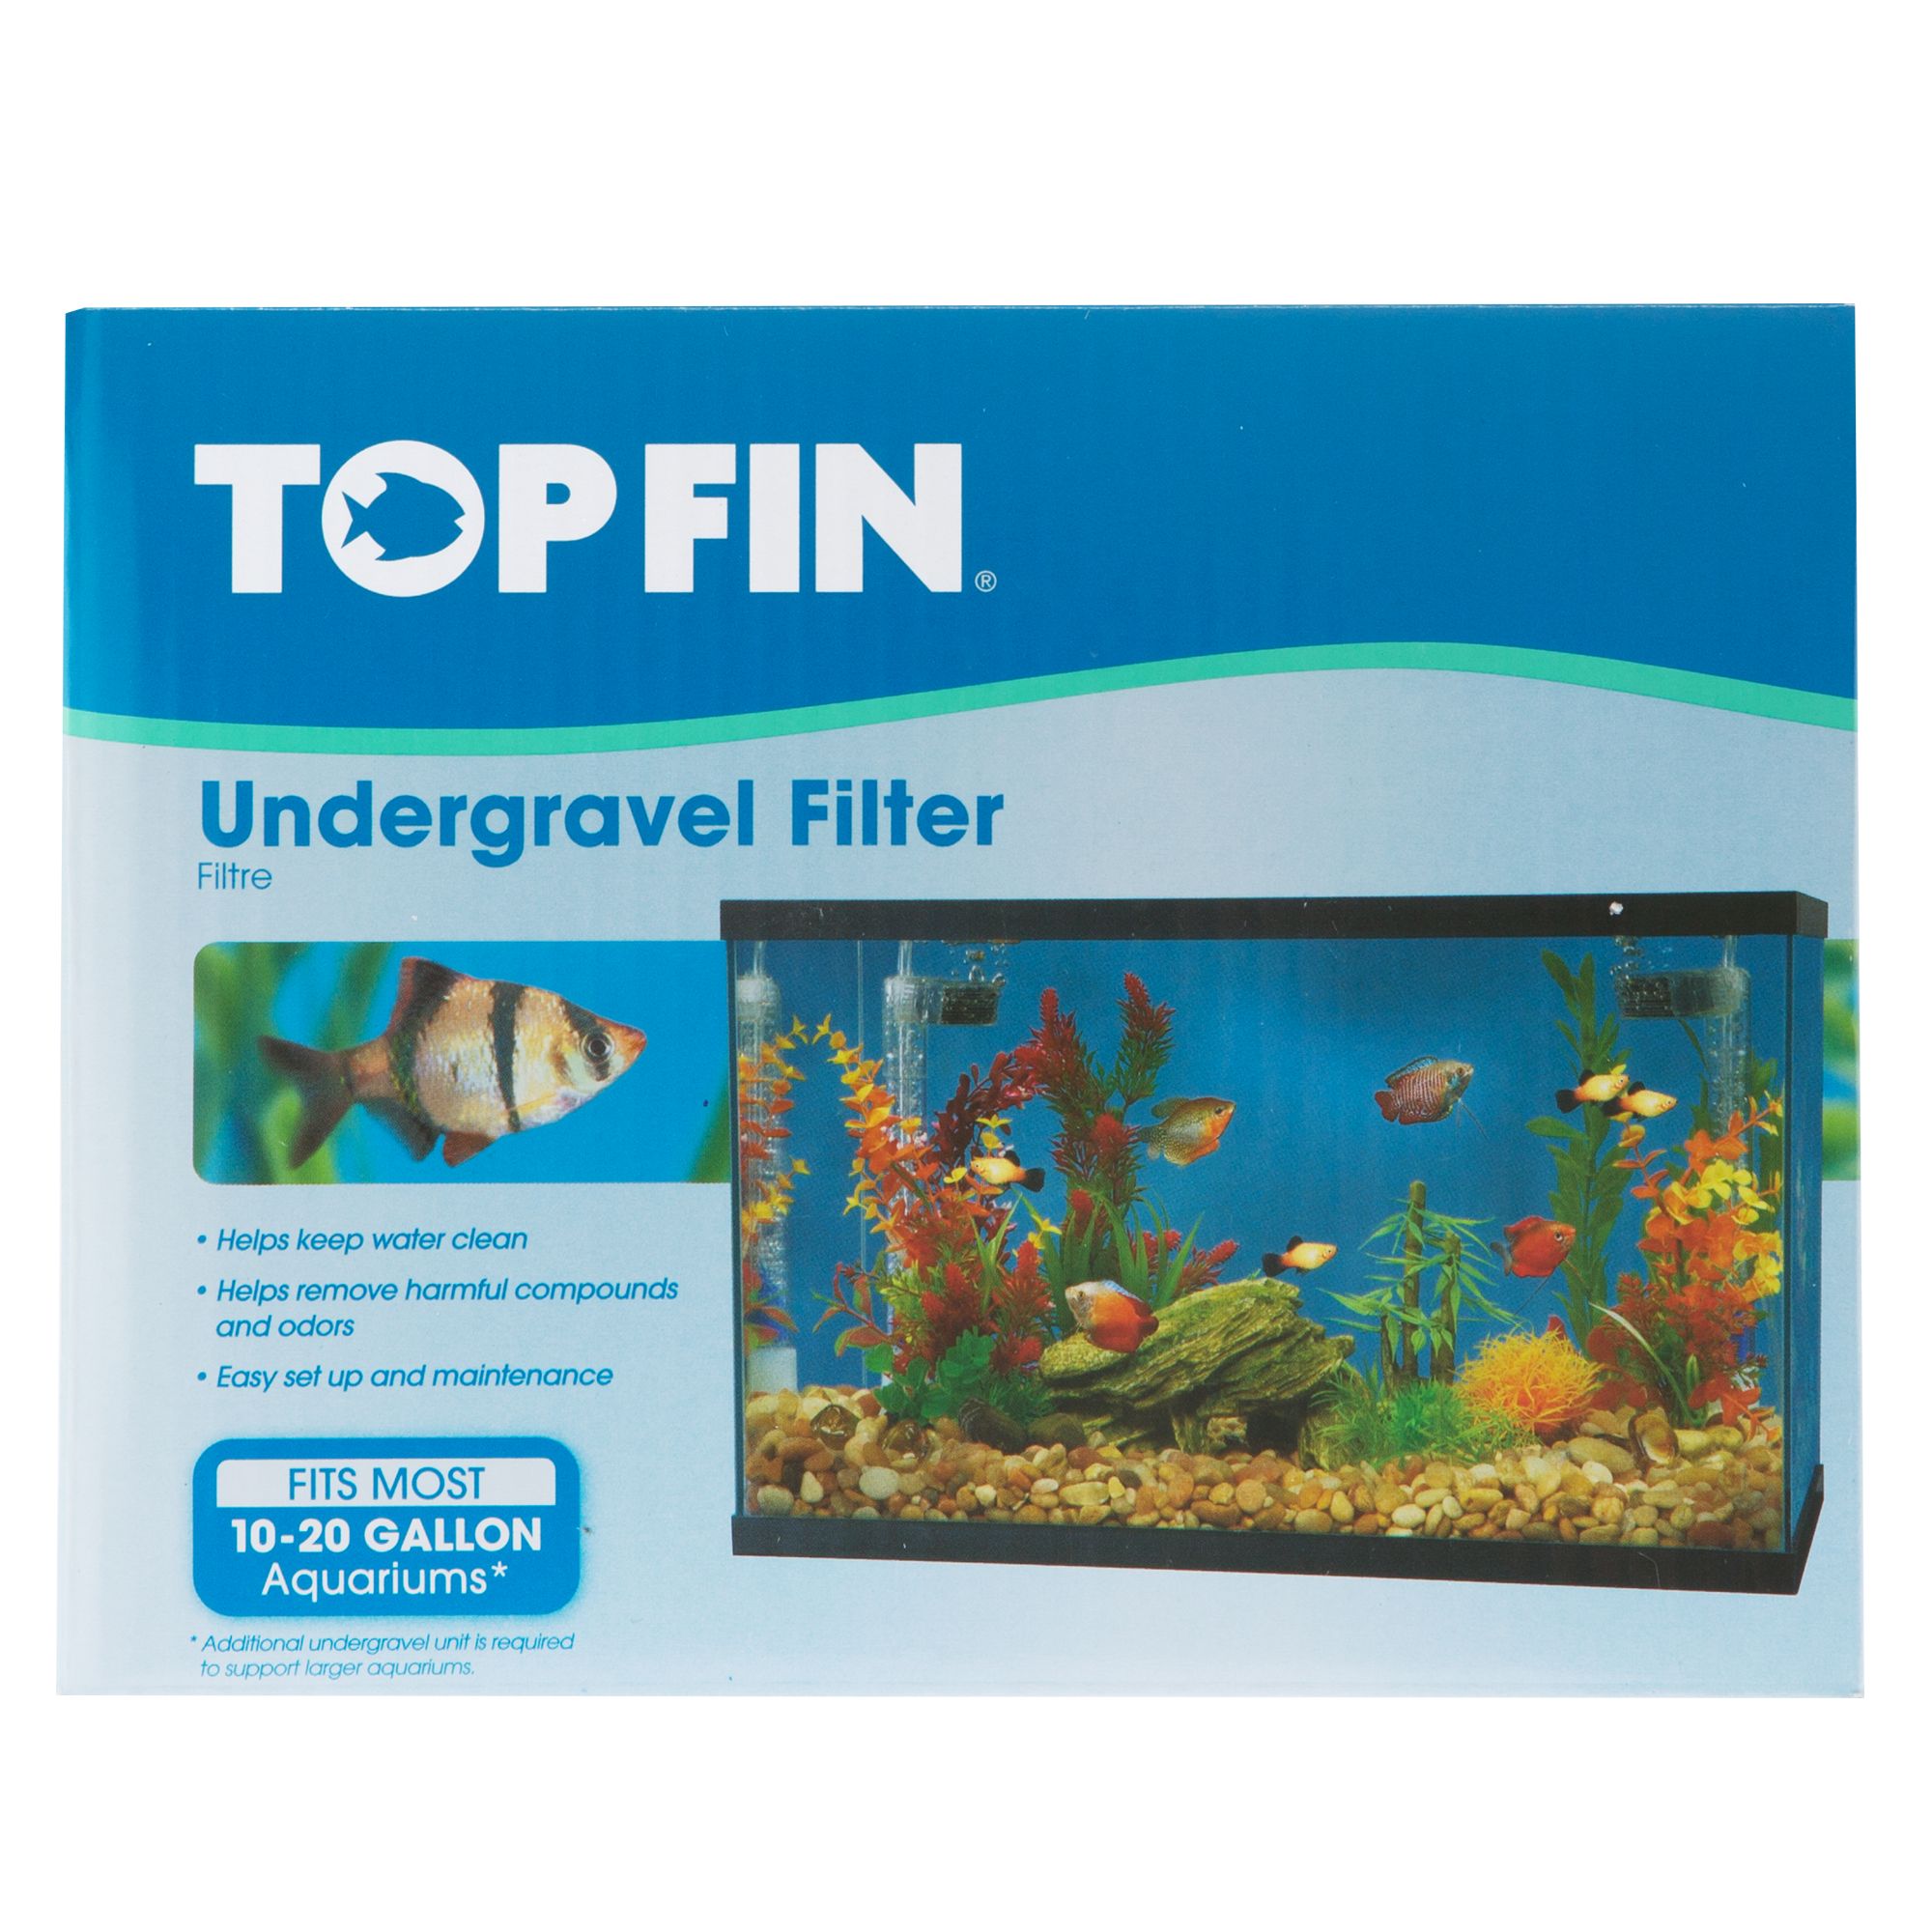 Aquarium Filter Fish Tank Upper Box Filters System for 10/20 Gallon Fish Tank